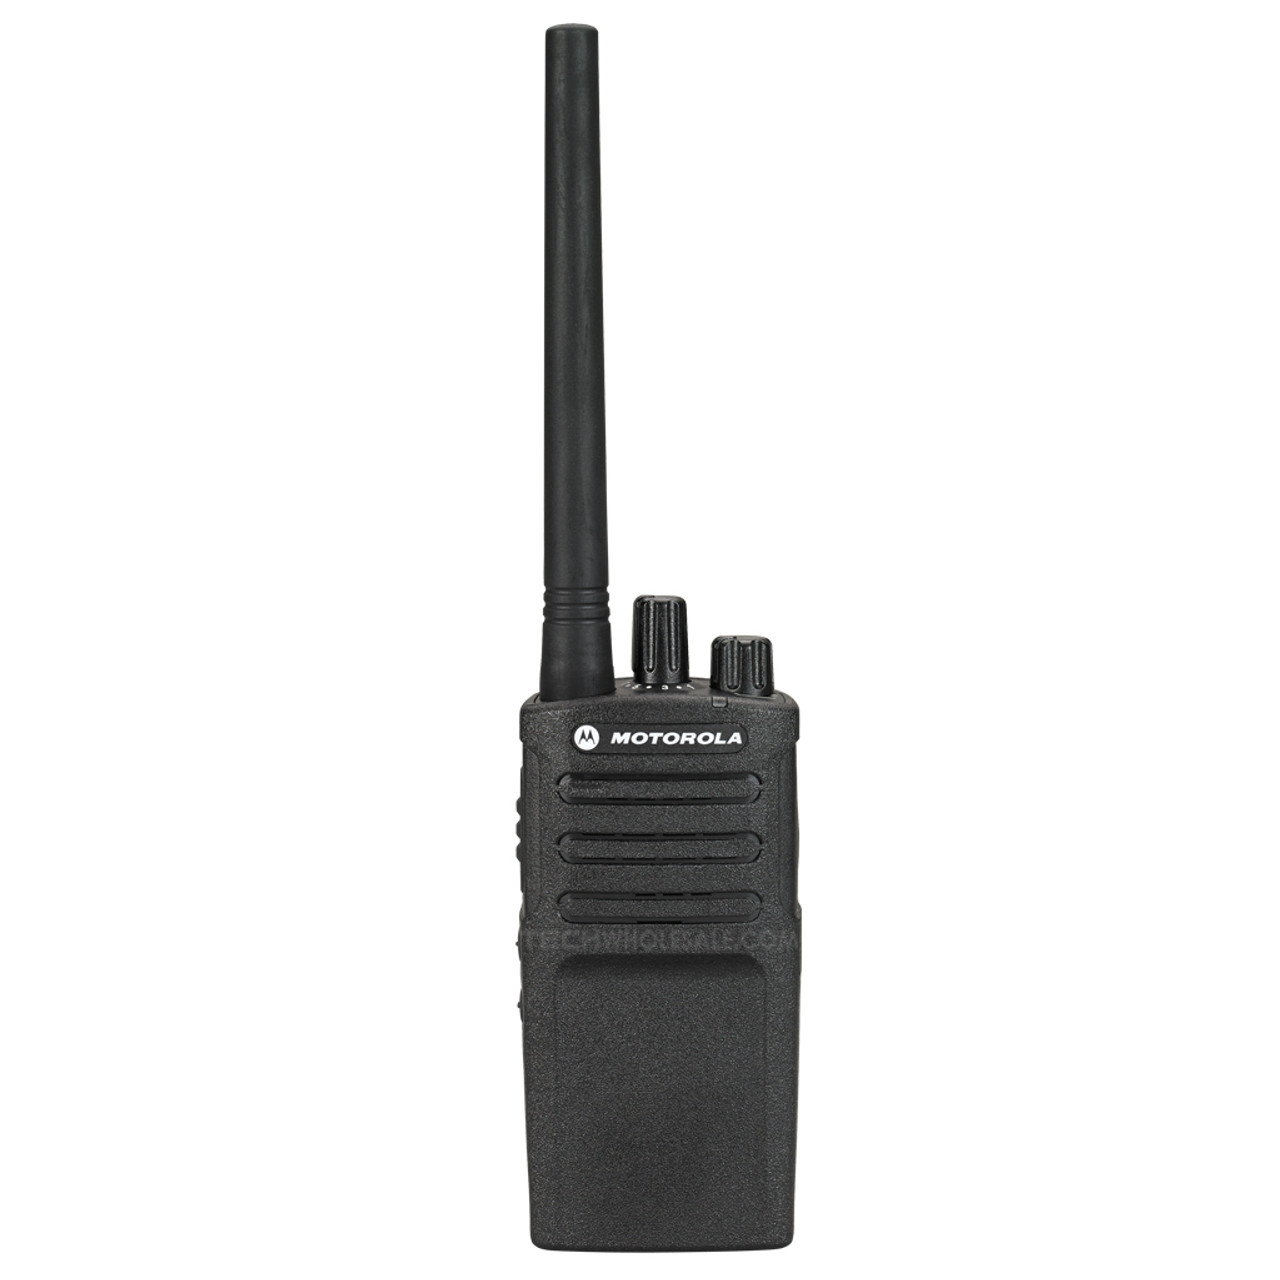 Ejecutante buffet regla Motorola RMV2080 radio walkie talkie